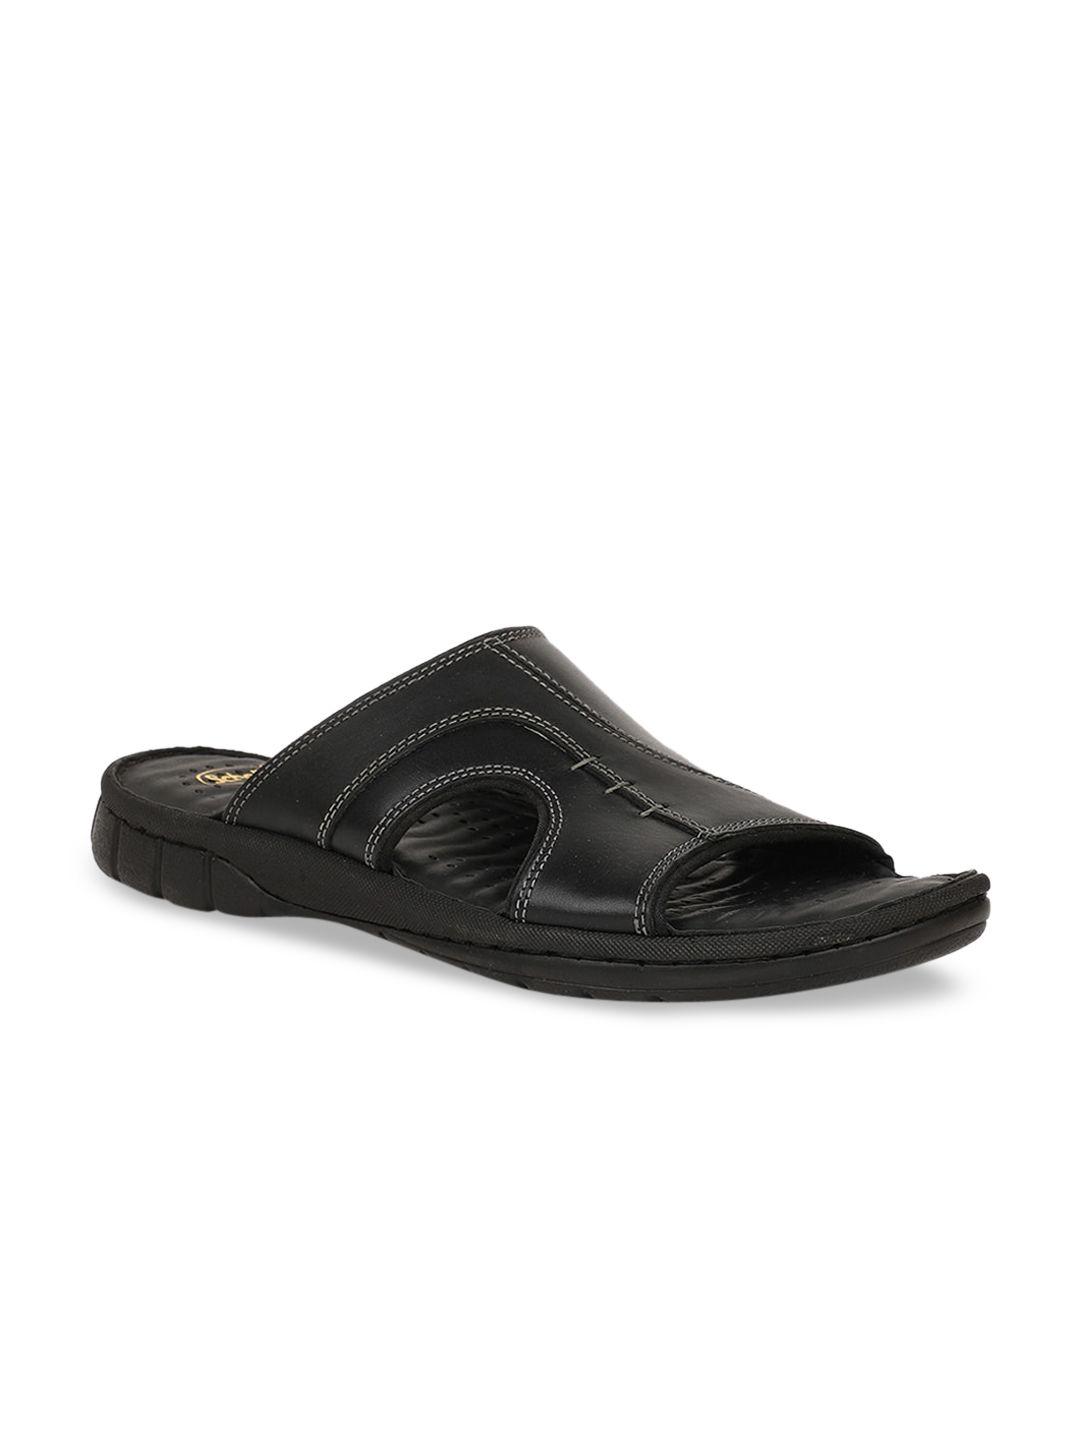 scholl men black solid leather comfort sandals